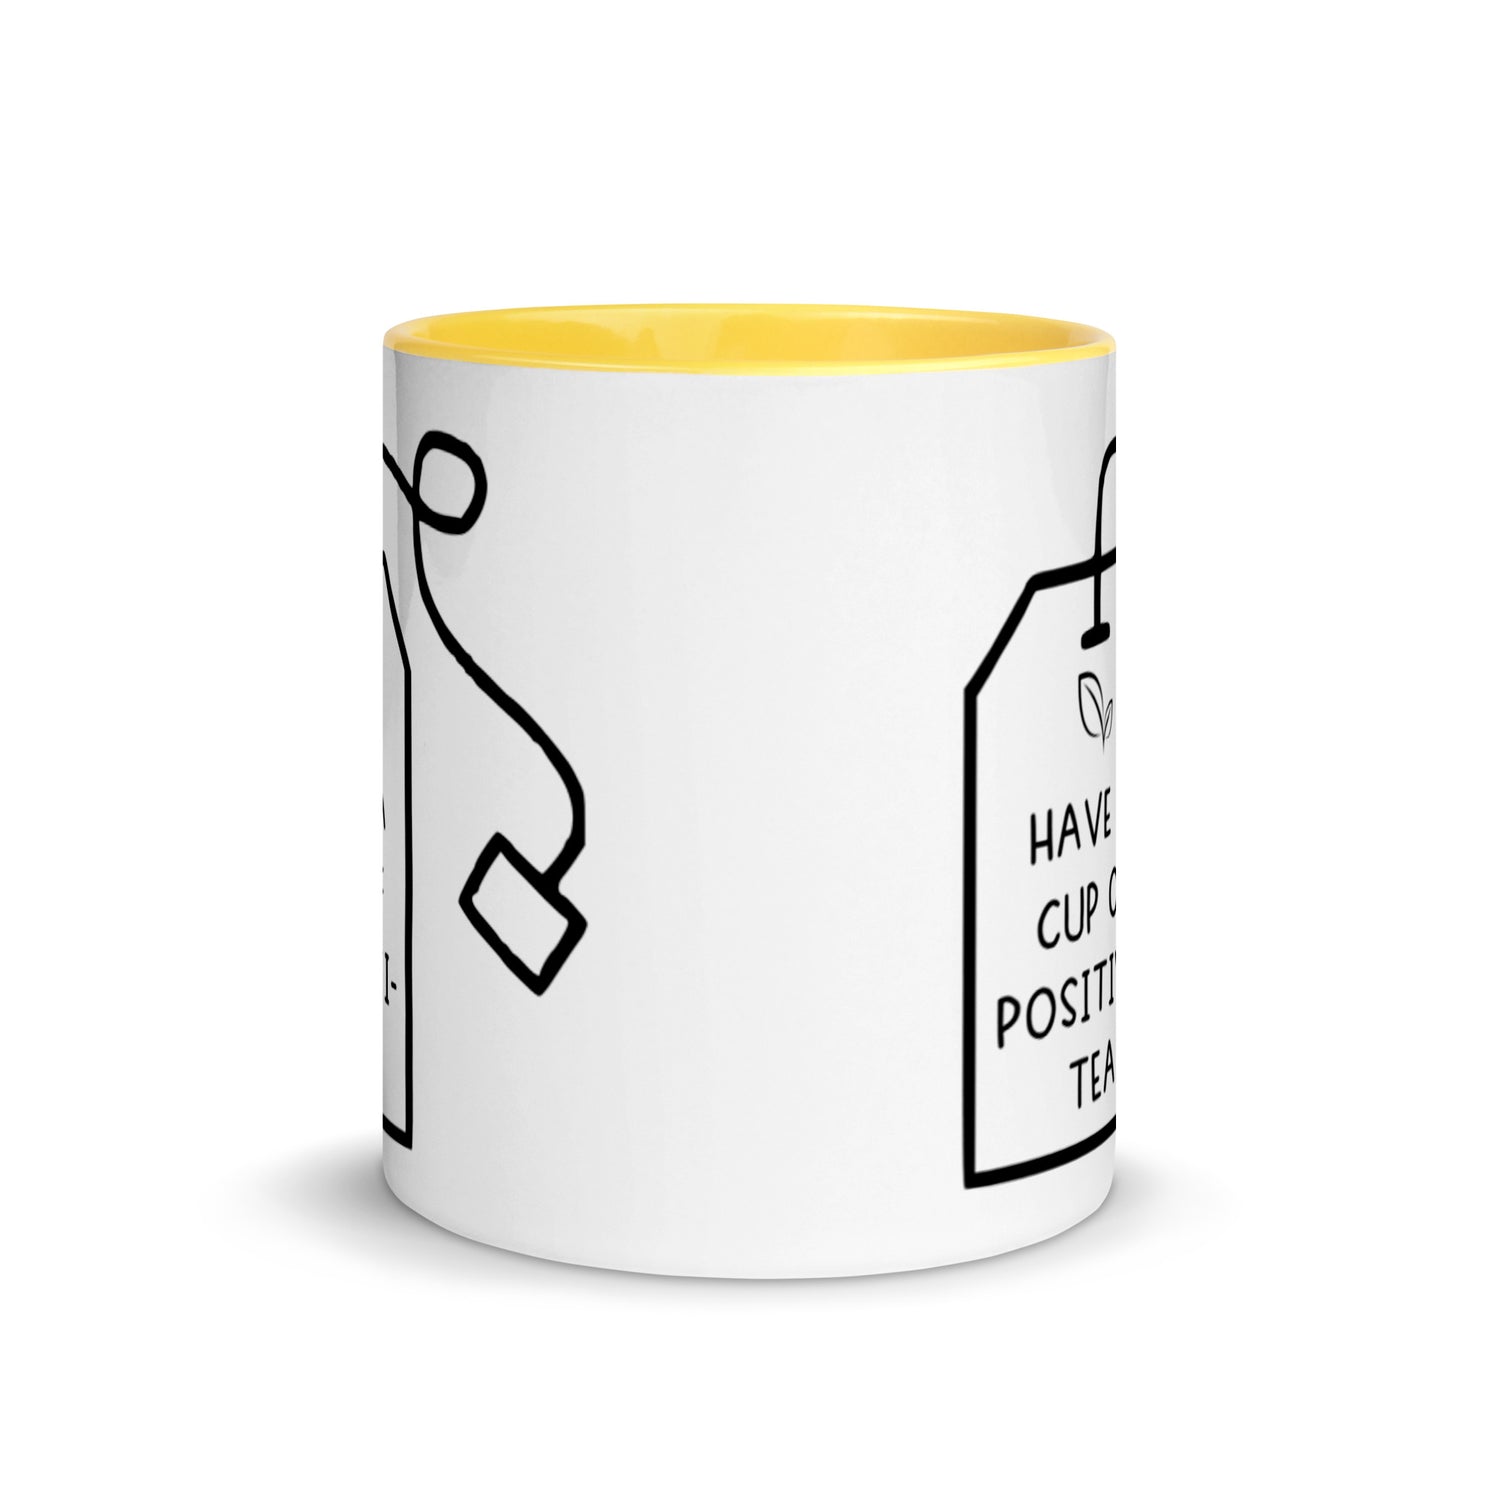 Have a Cup of Positivi-Tea Mug, yellow and handle